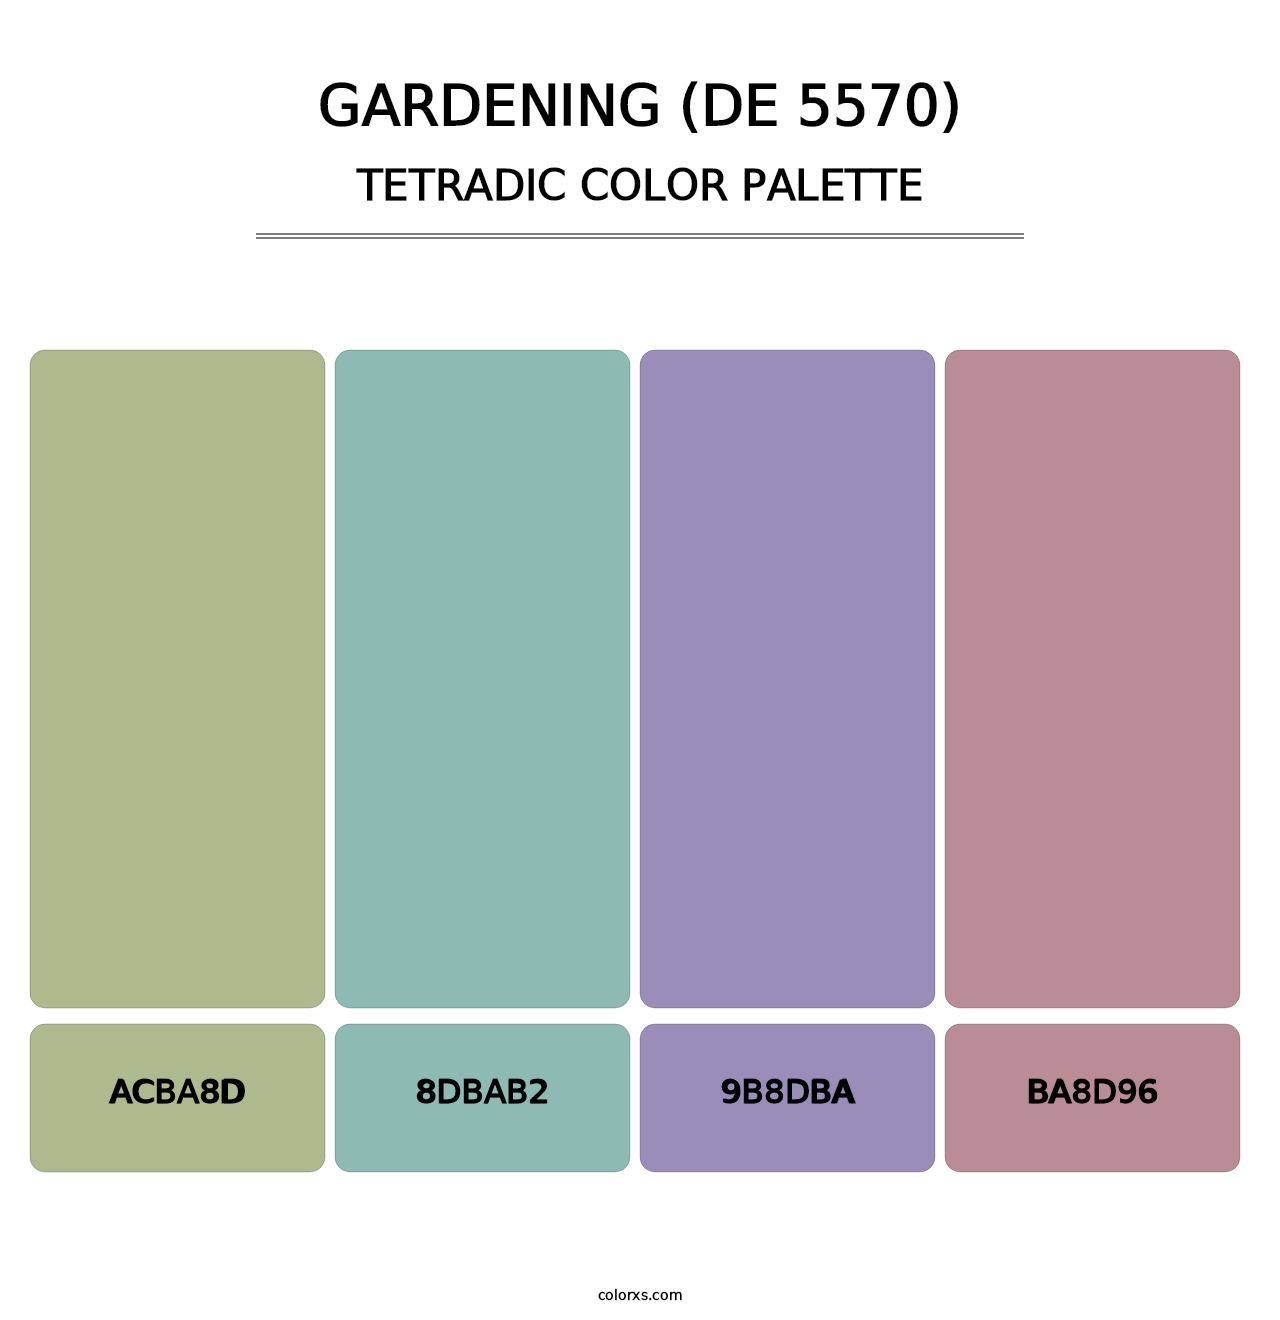 Gardening (DE 5570) - Tetradic Color Palette